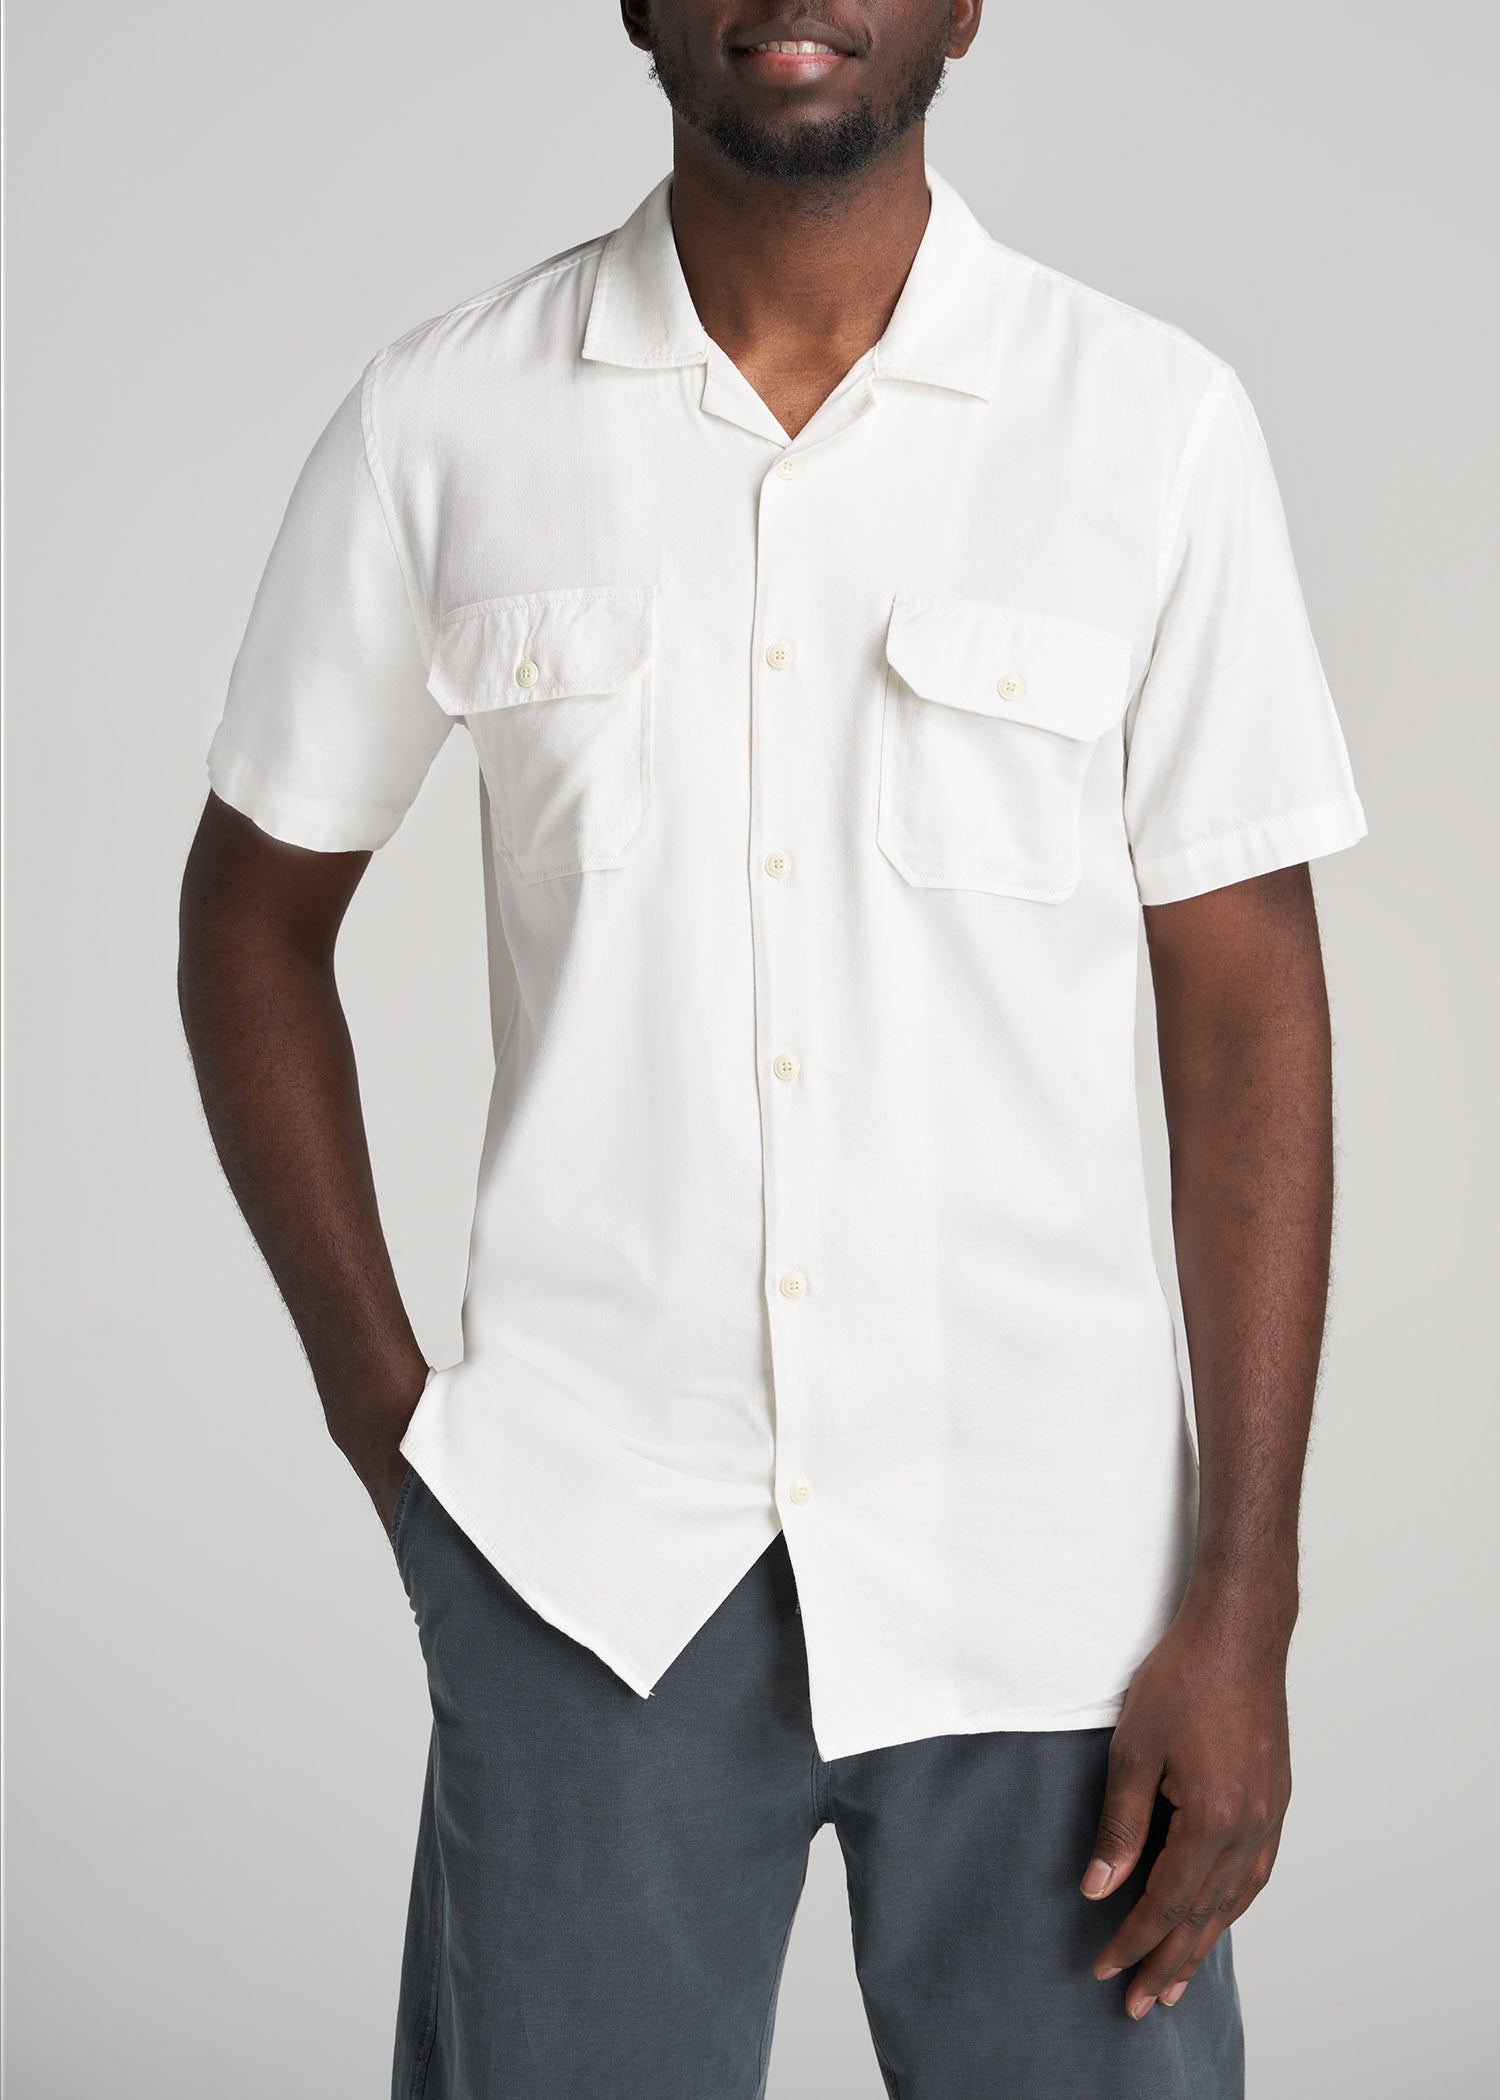 LJ&S Two-Pocket Camp Shirt for Tall Men in Ecru S / Tall / Ecru